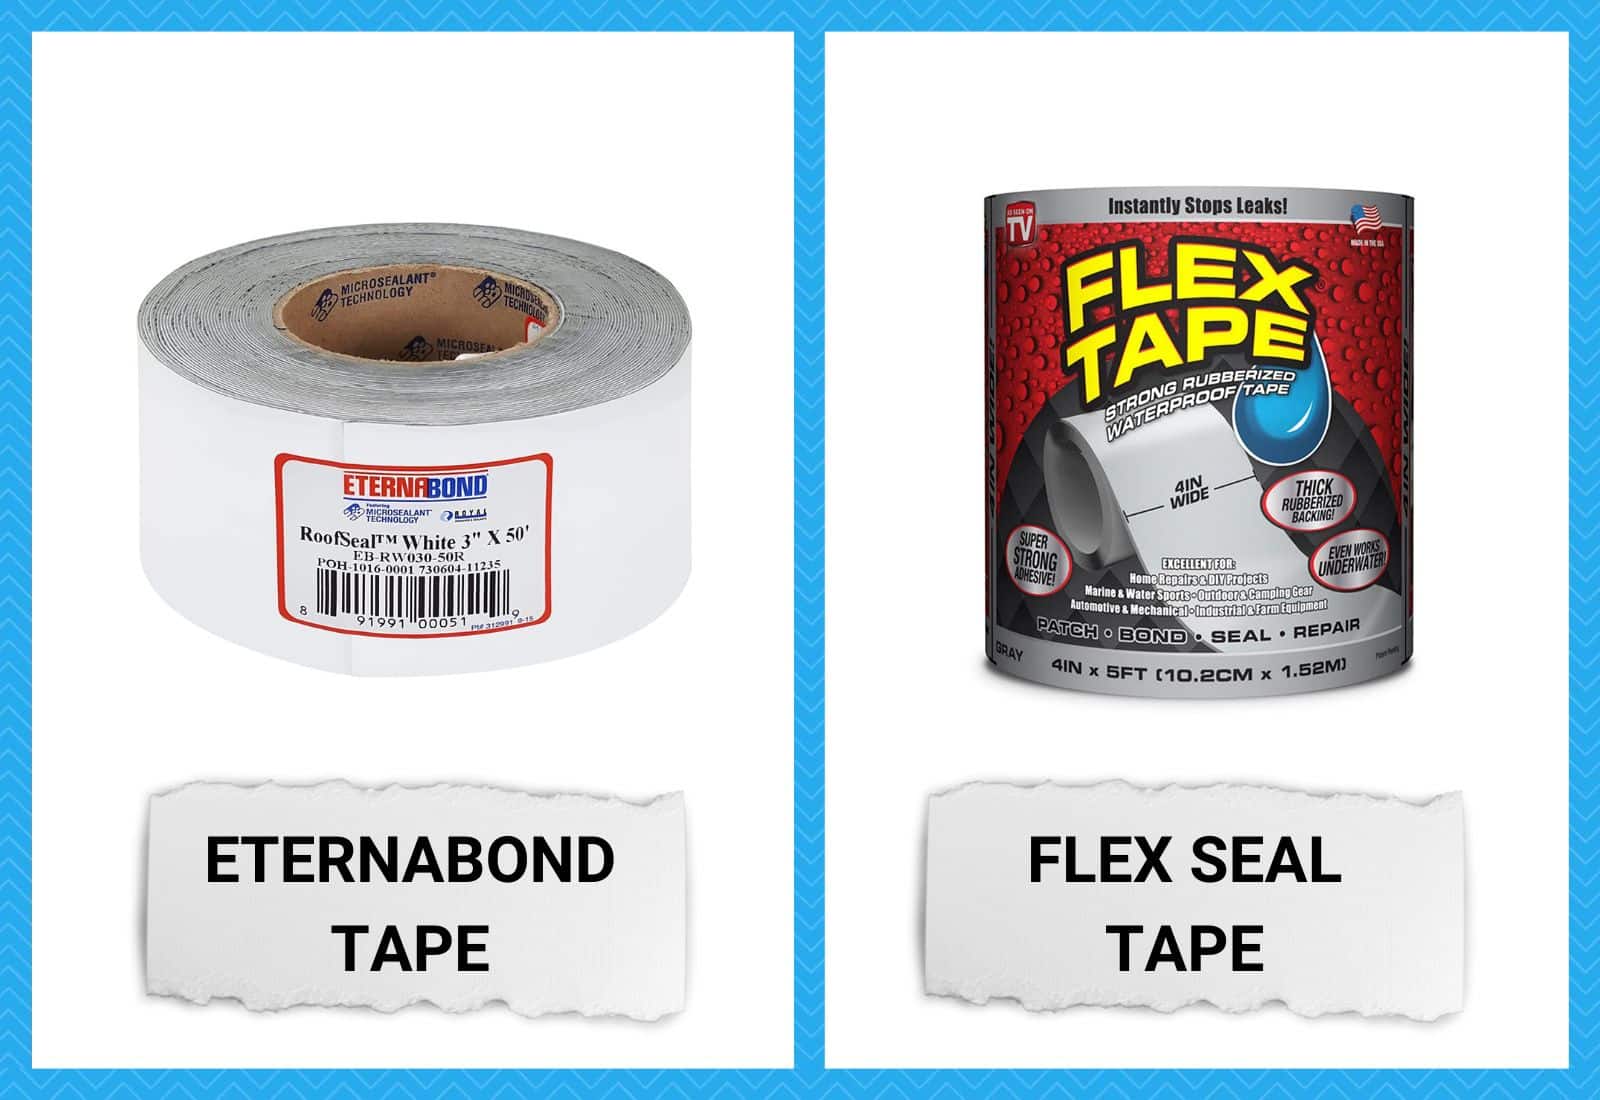 Eternabond Tape vs Flex Seal Tape